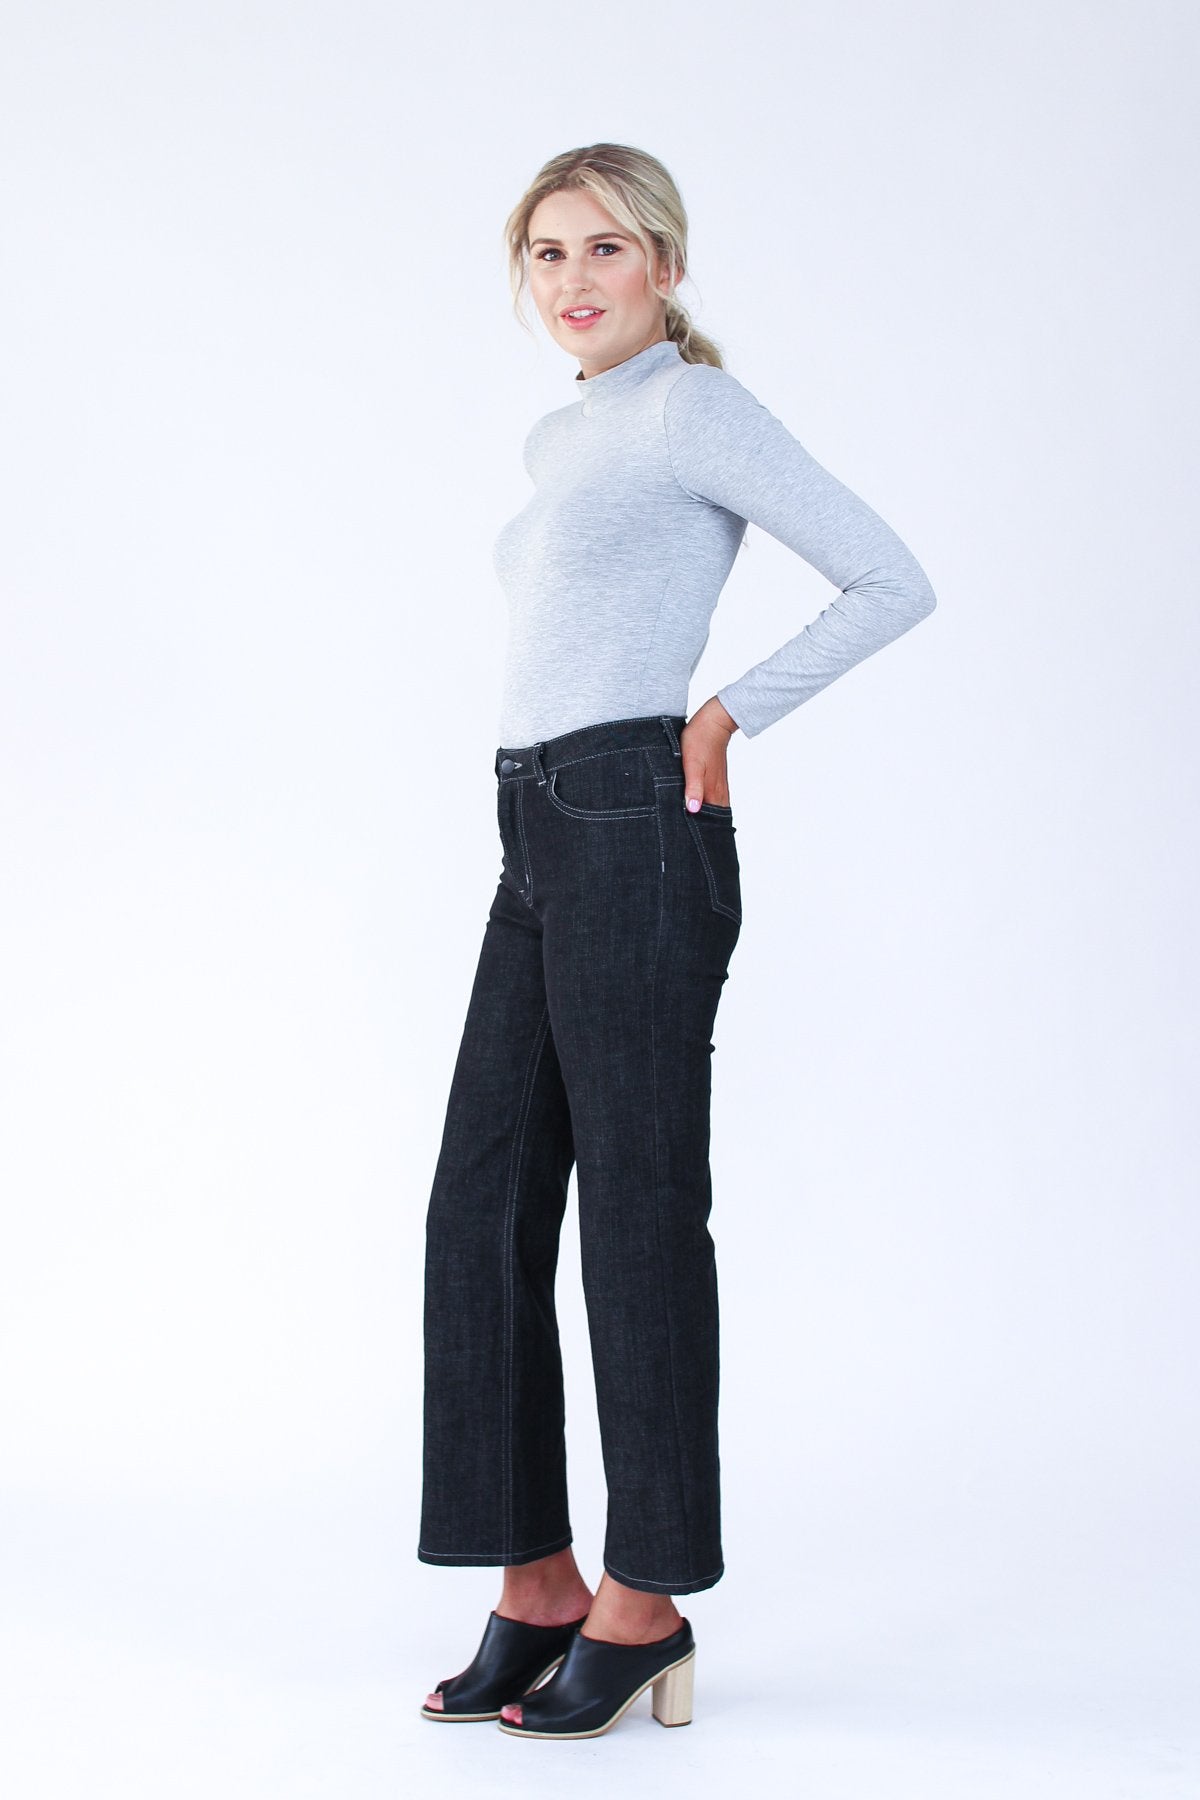 Megan Nielsen - Ash Jeans Sewing Pattern